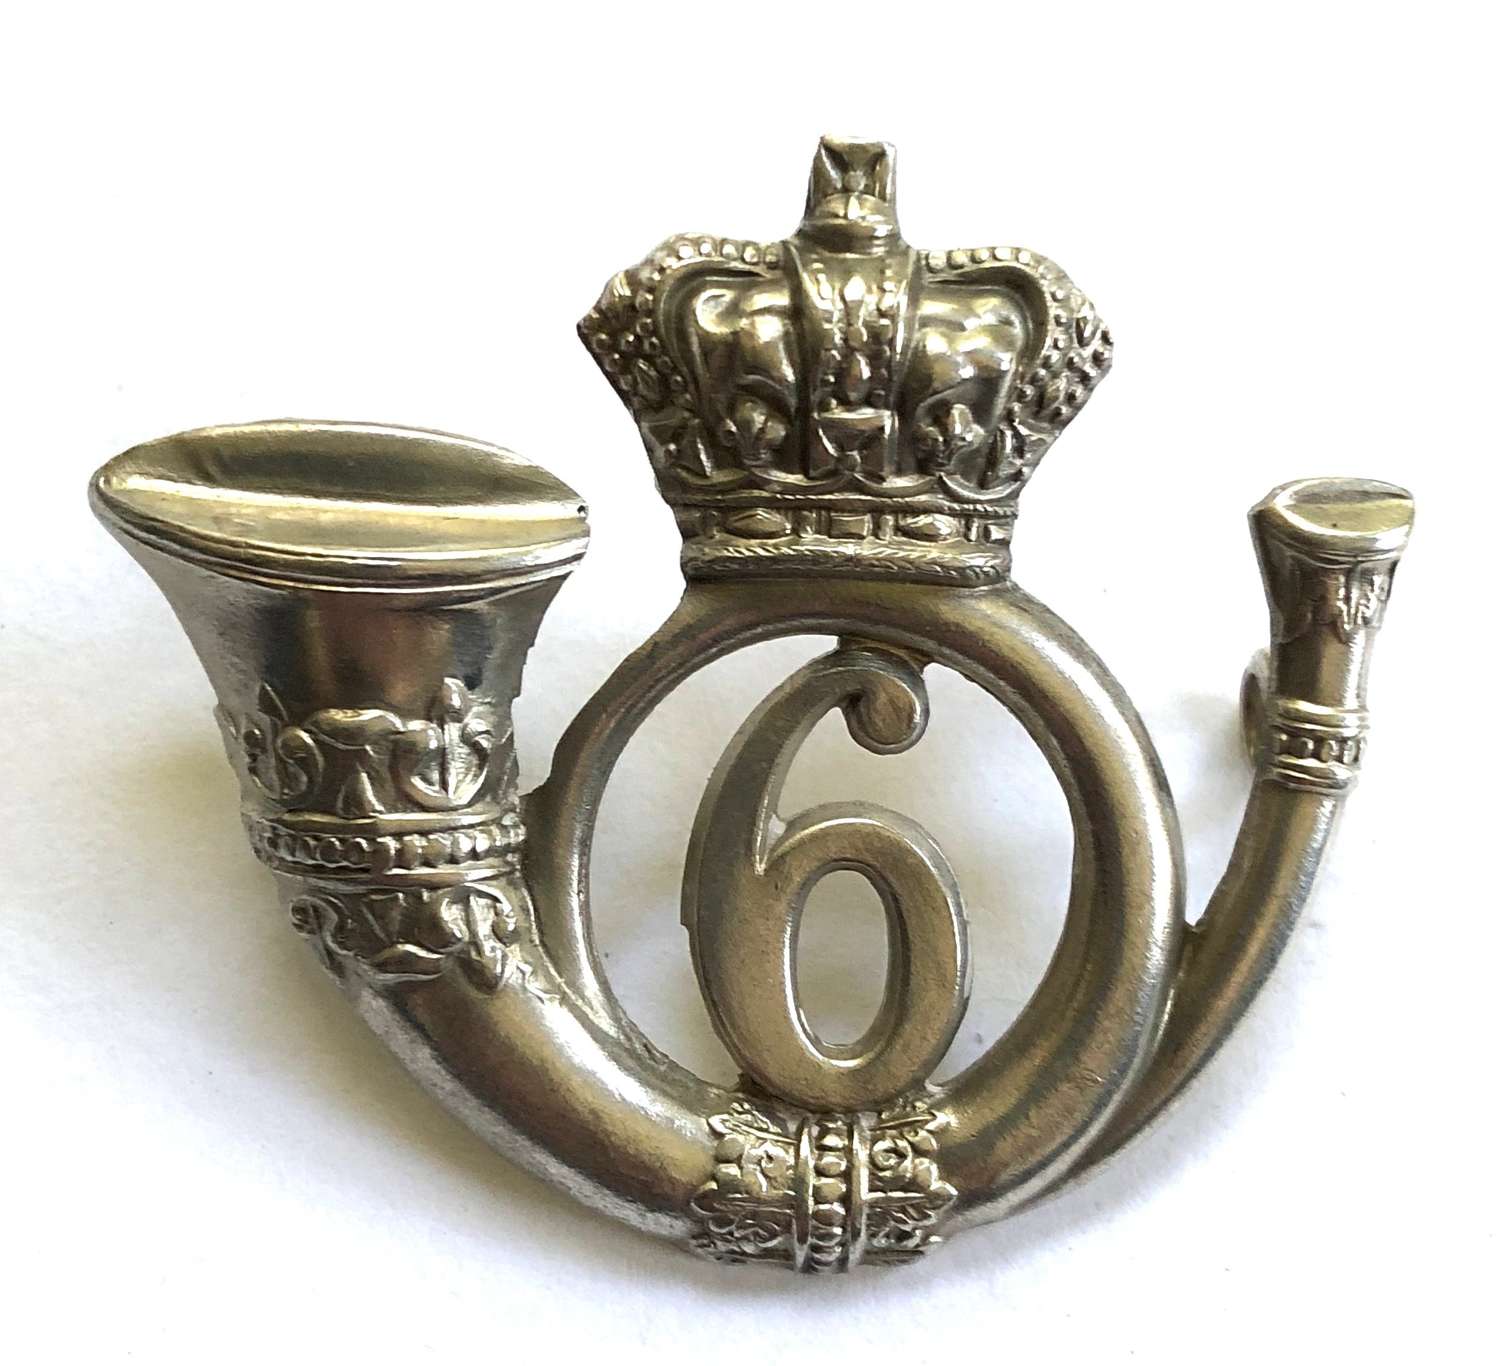 6th Lanarkshire Rifle Volunteers Victorian shako / glengarry badge